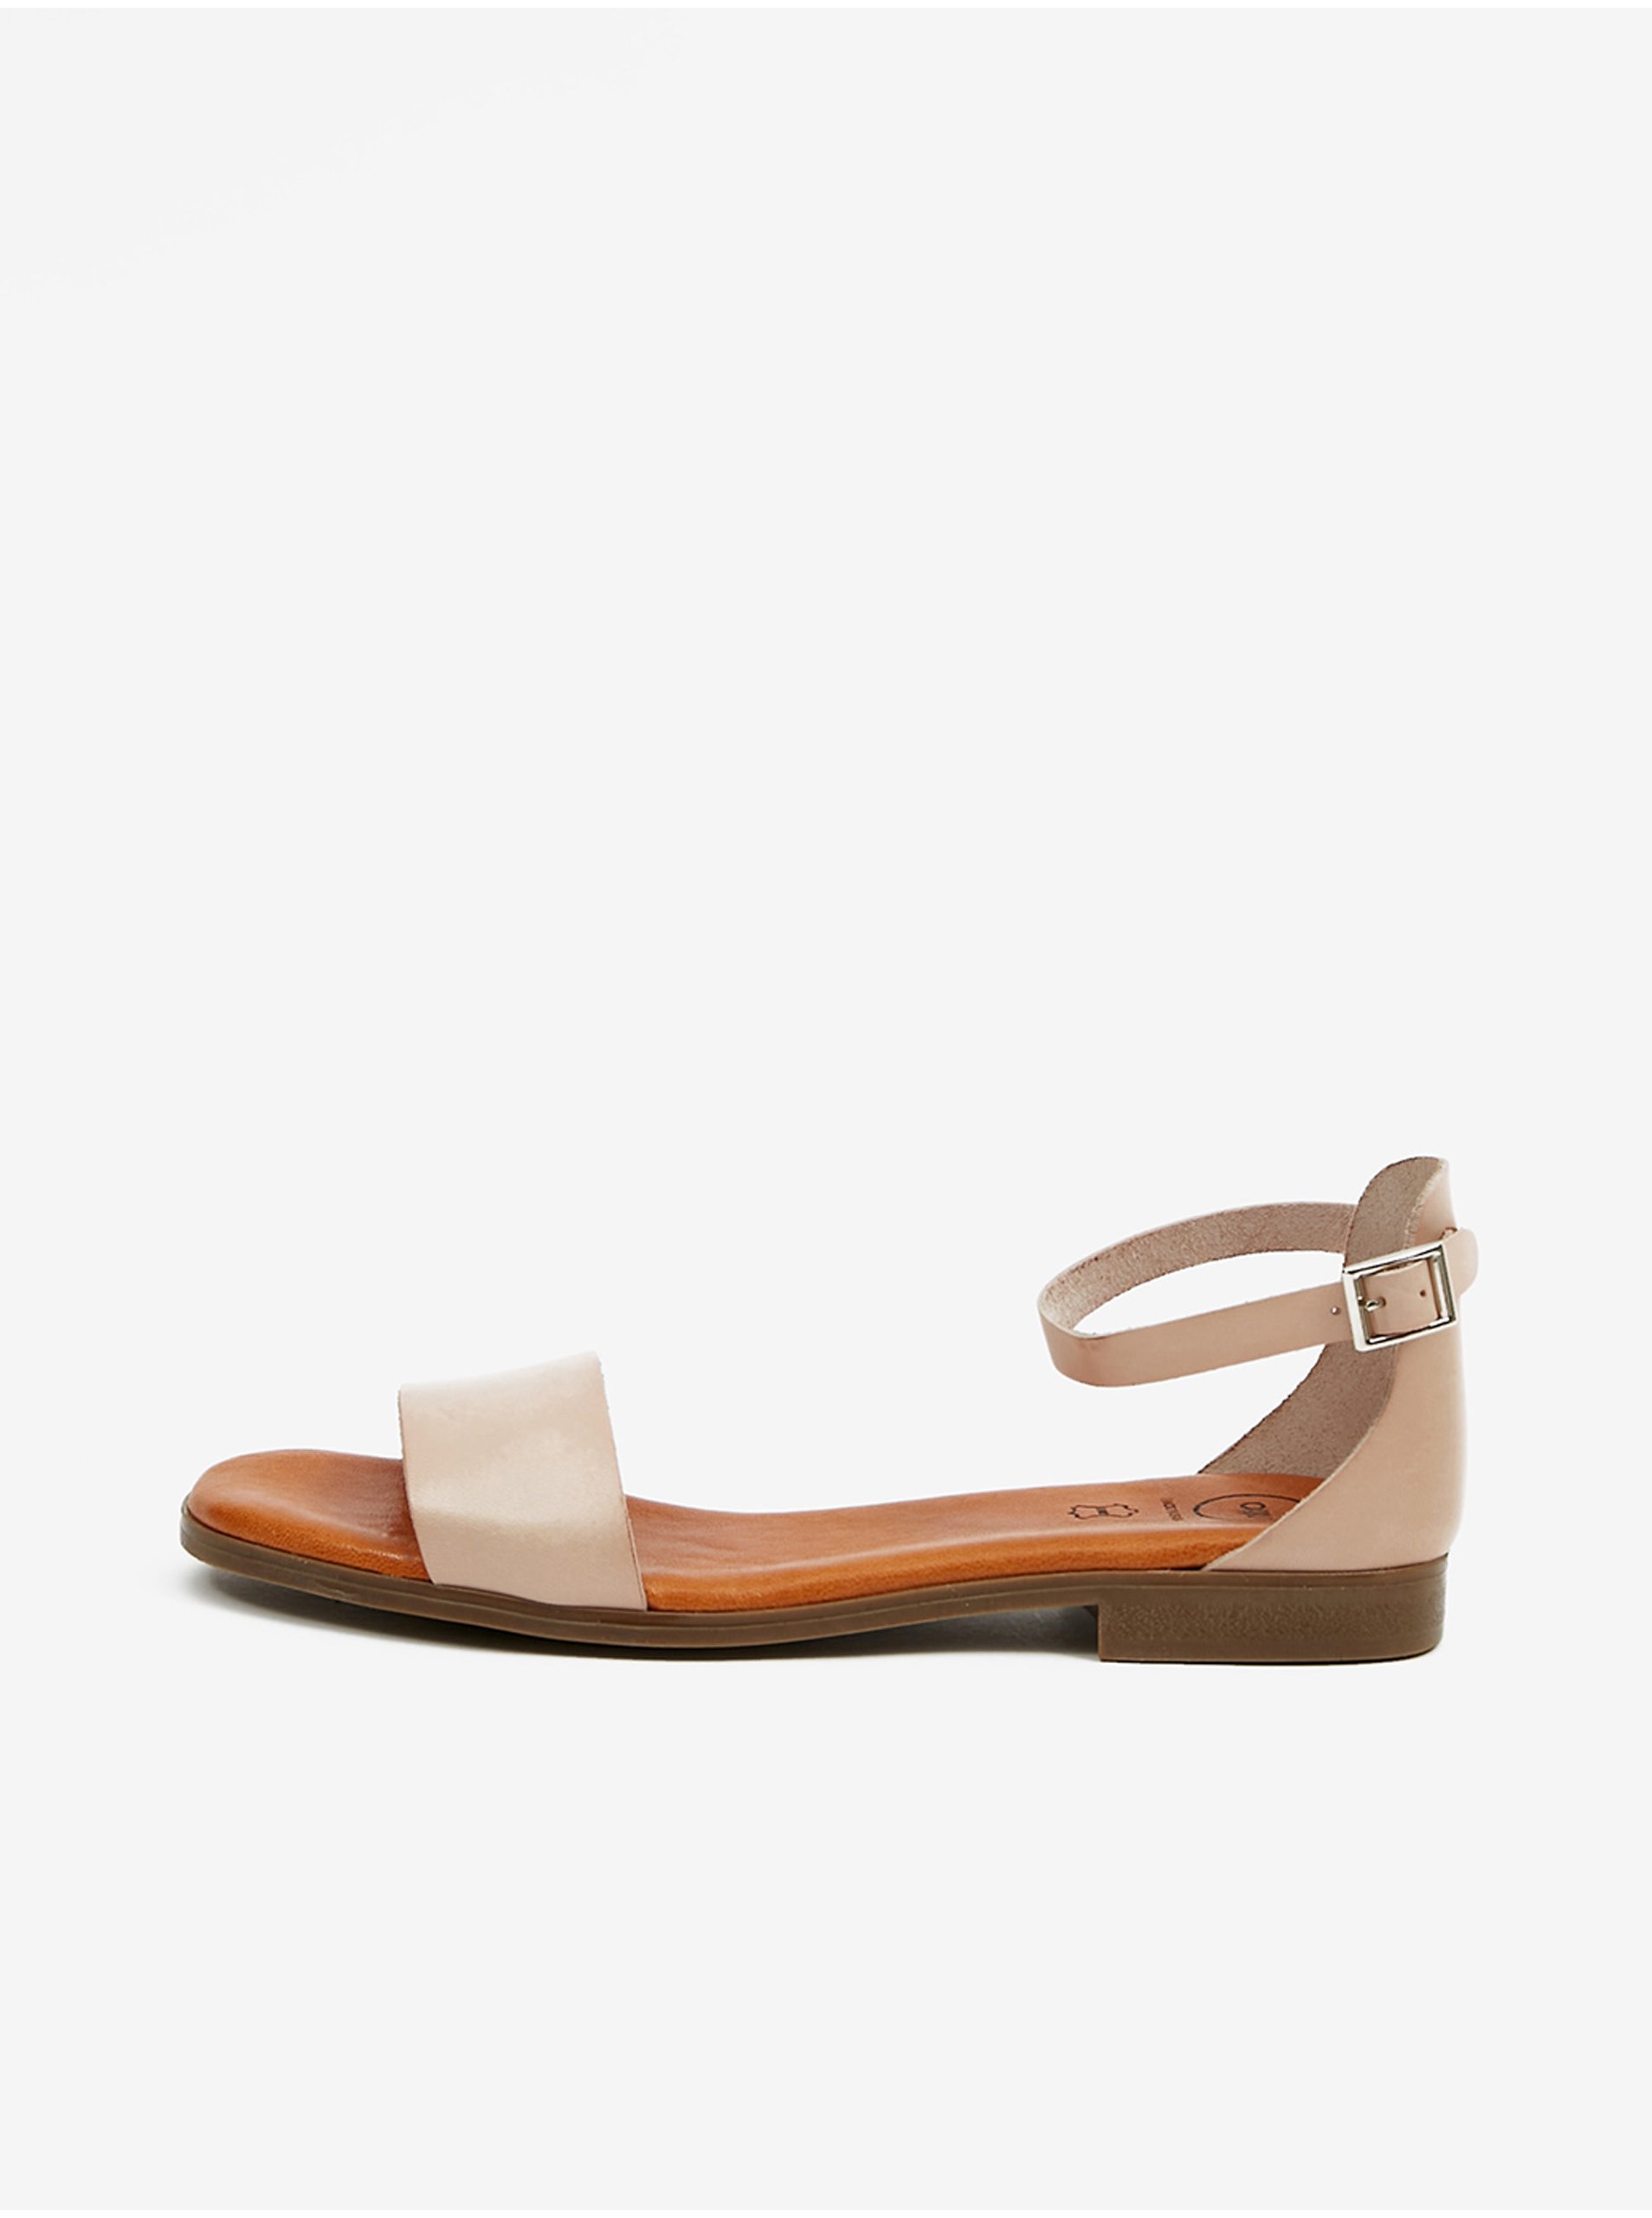 E-shop Starorůžové dámské kožené sandály OJJU